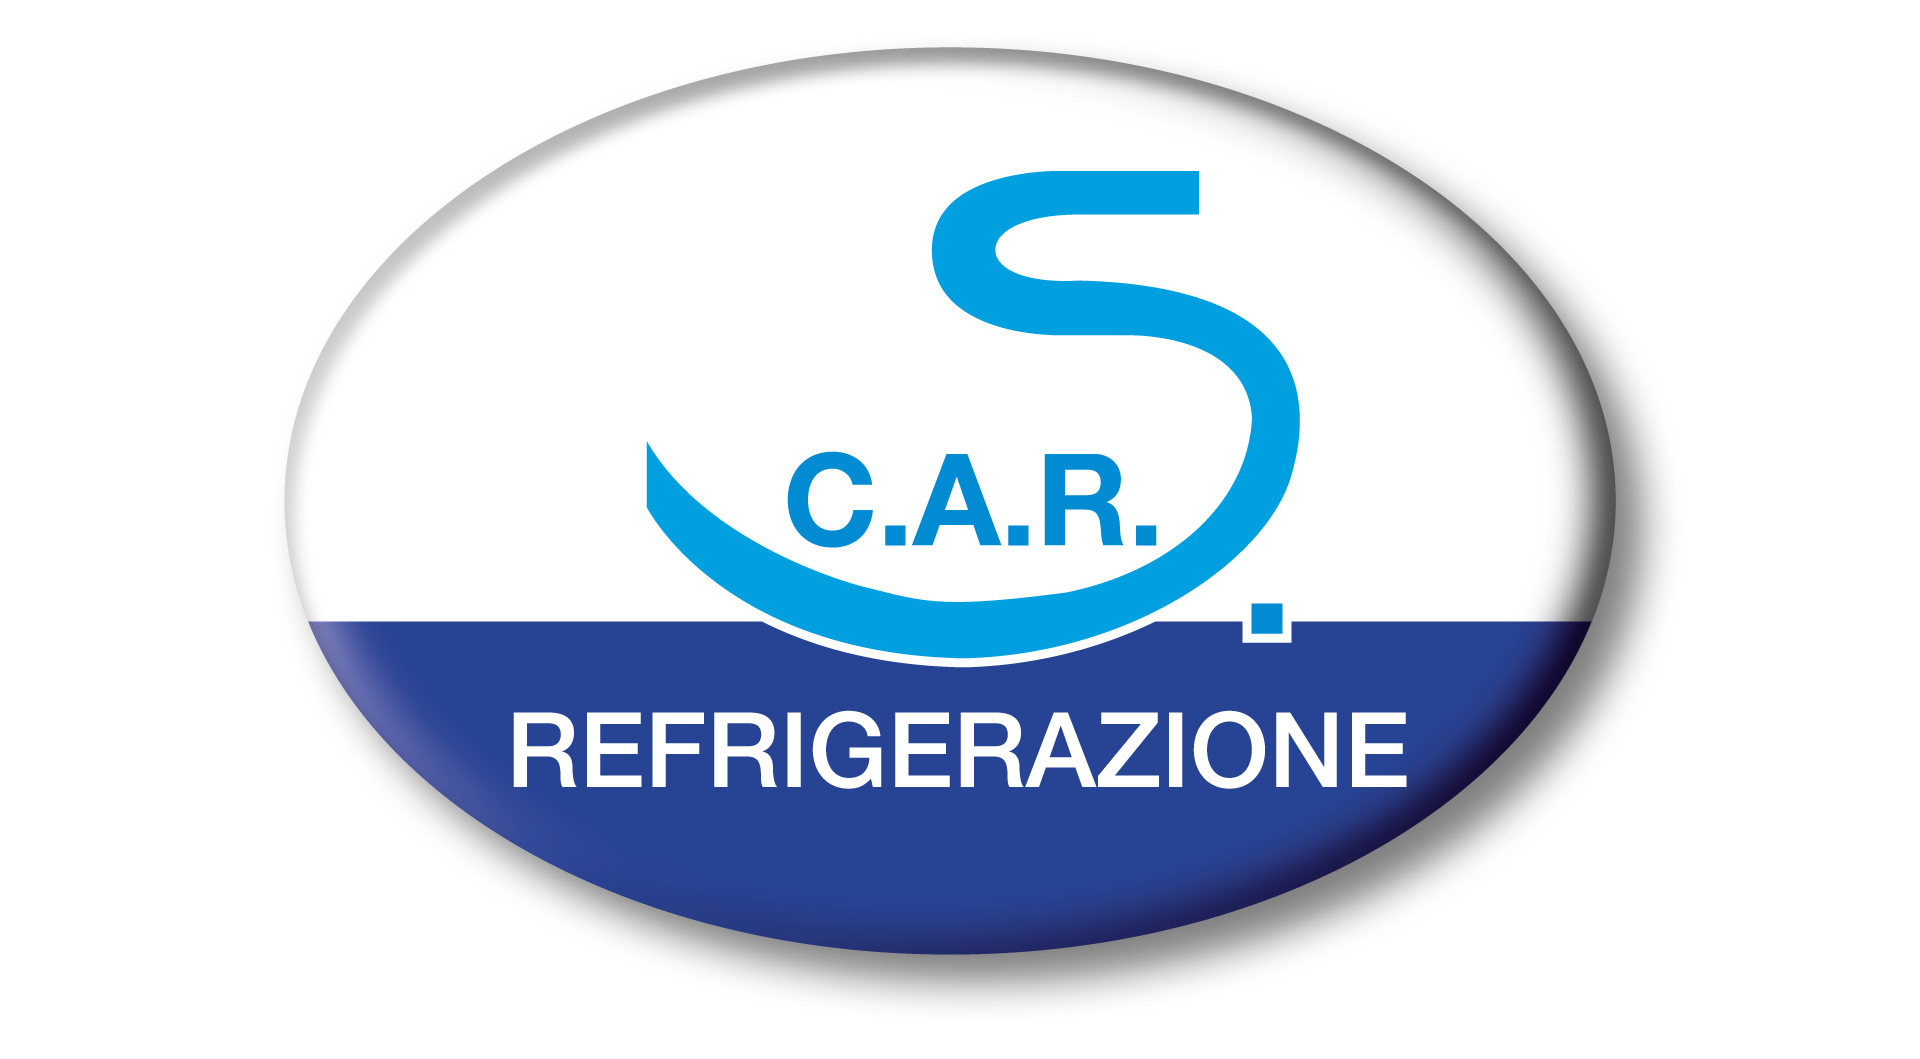 Field Service Management Evolvex for Scar refrigeration